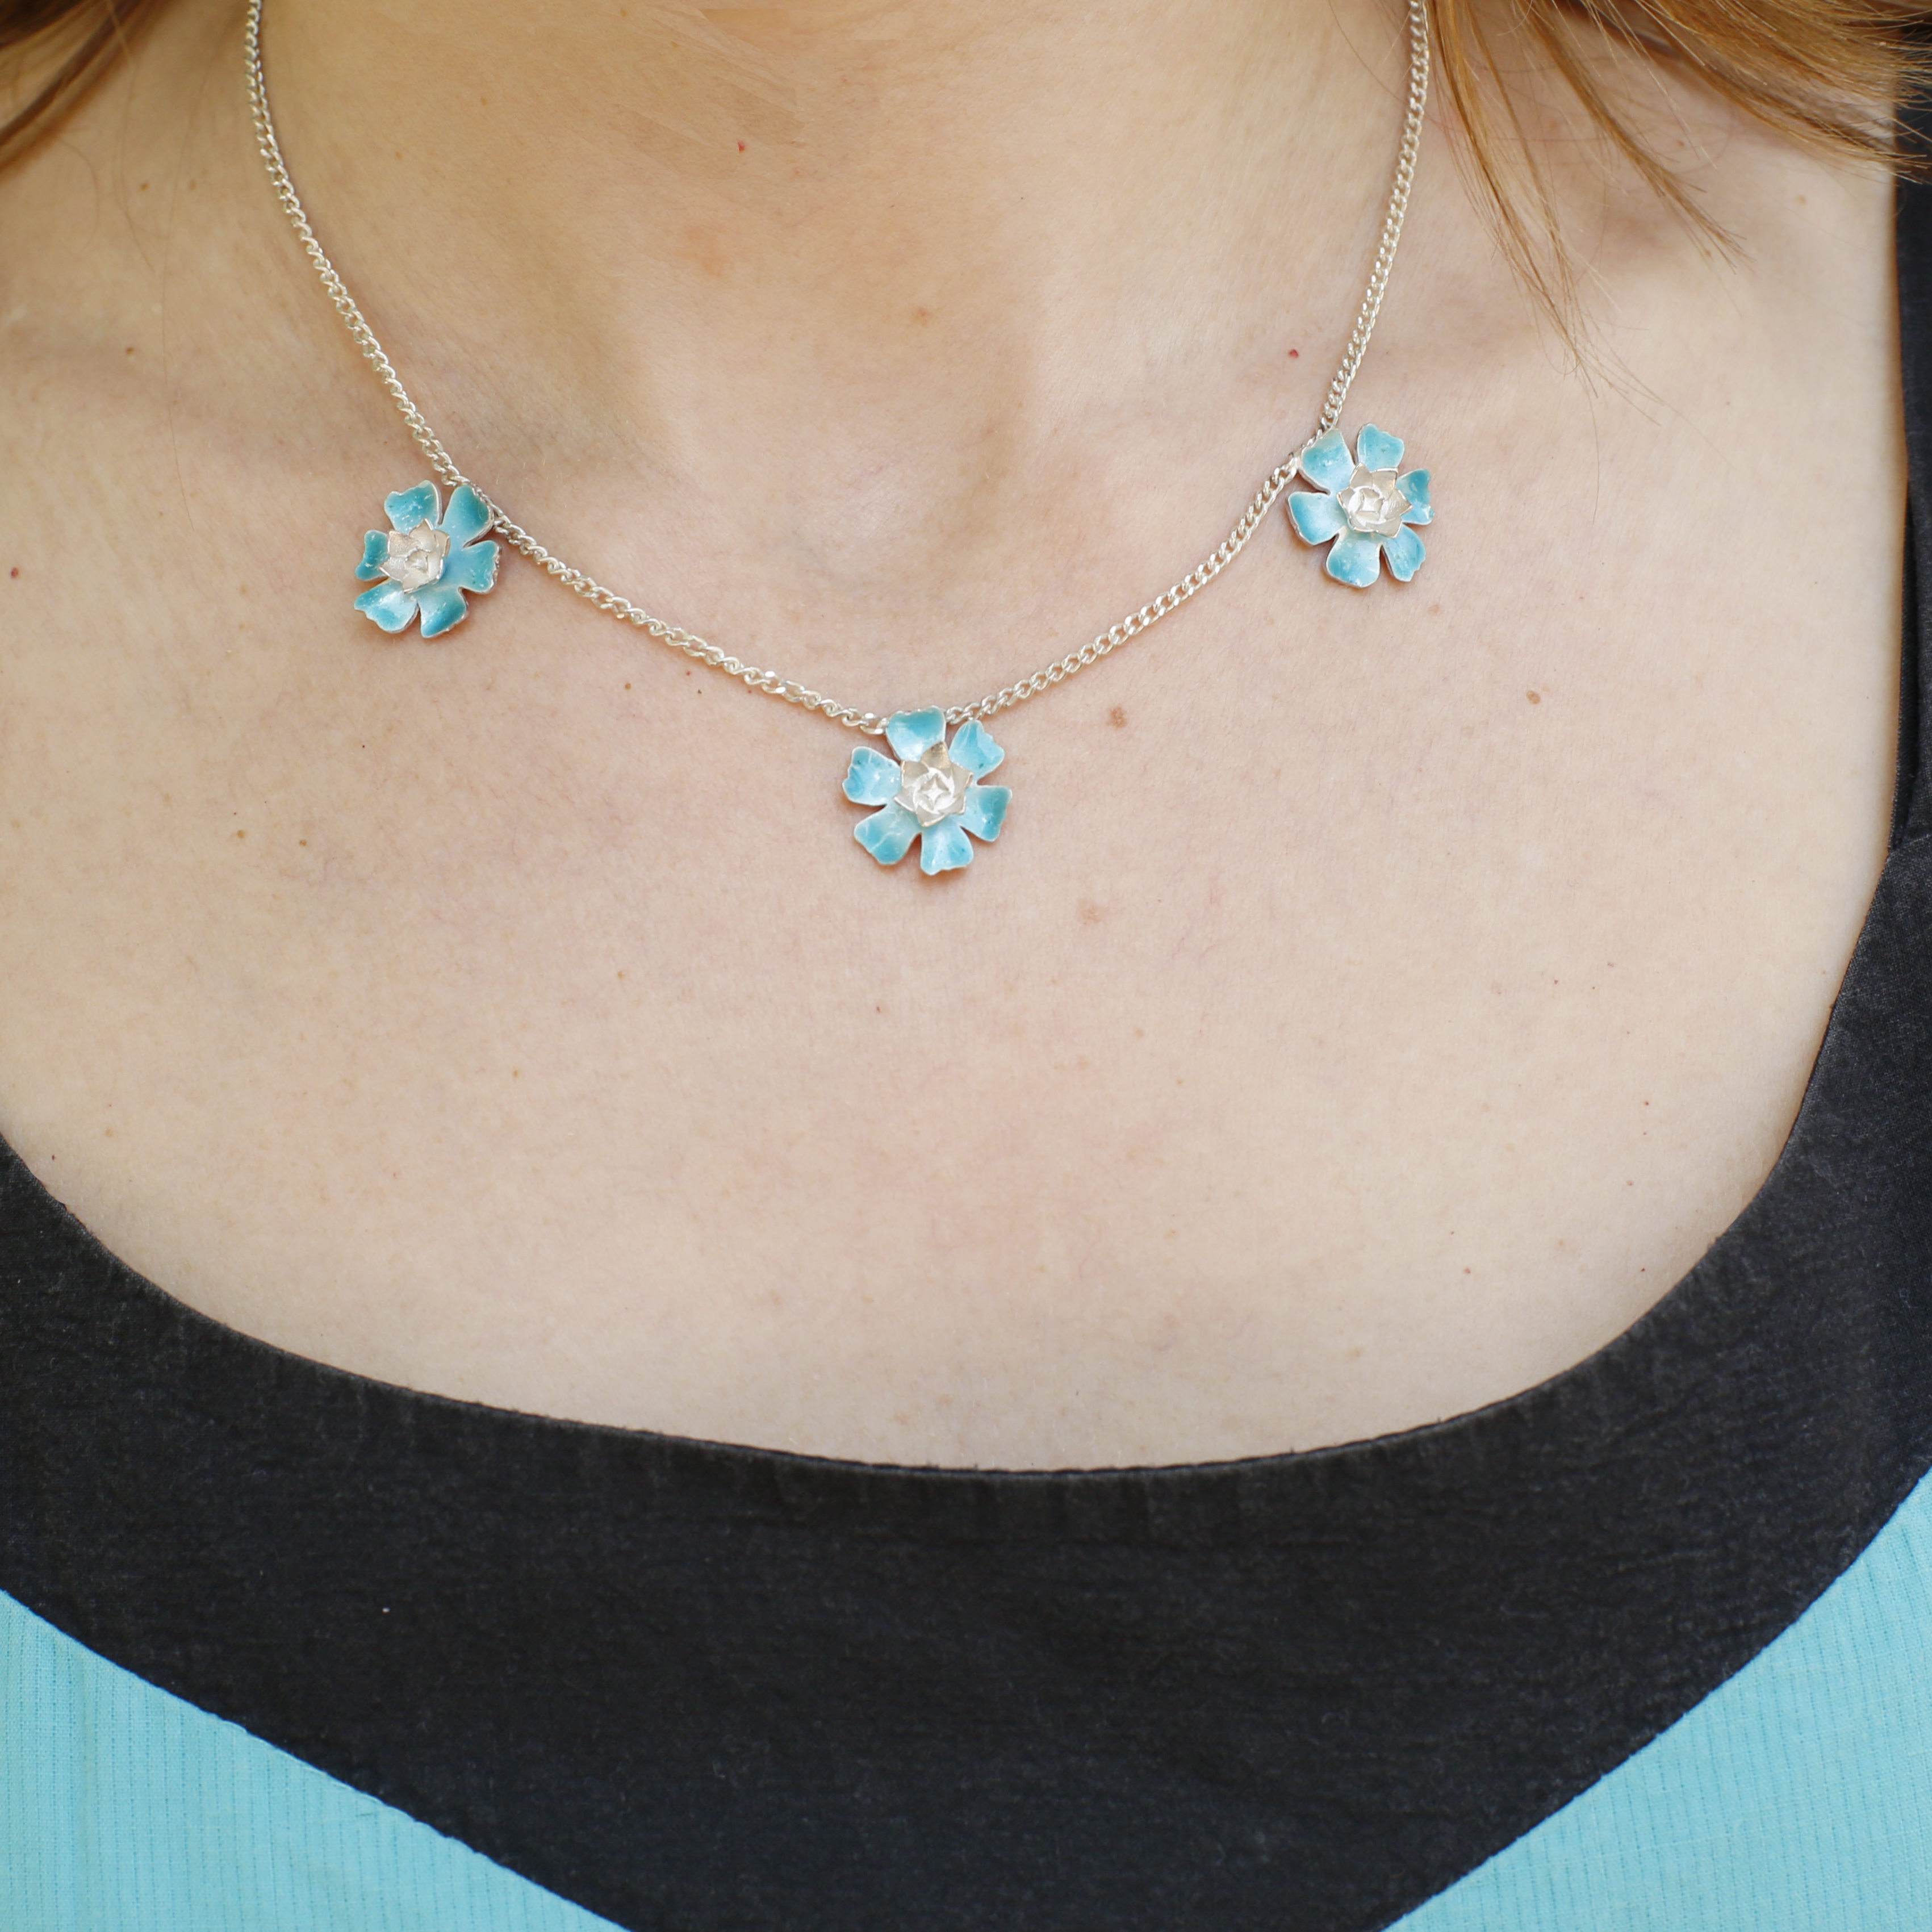 Turquoise Magnolia flowers necklace